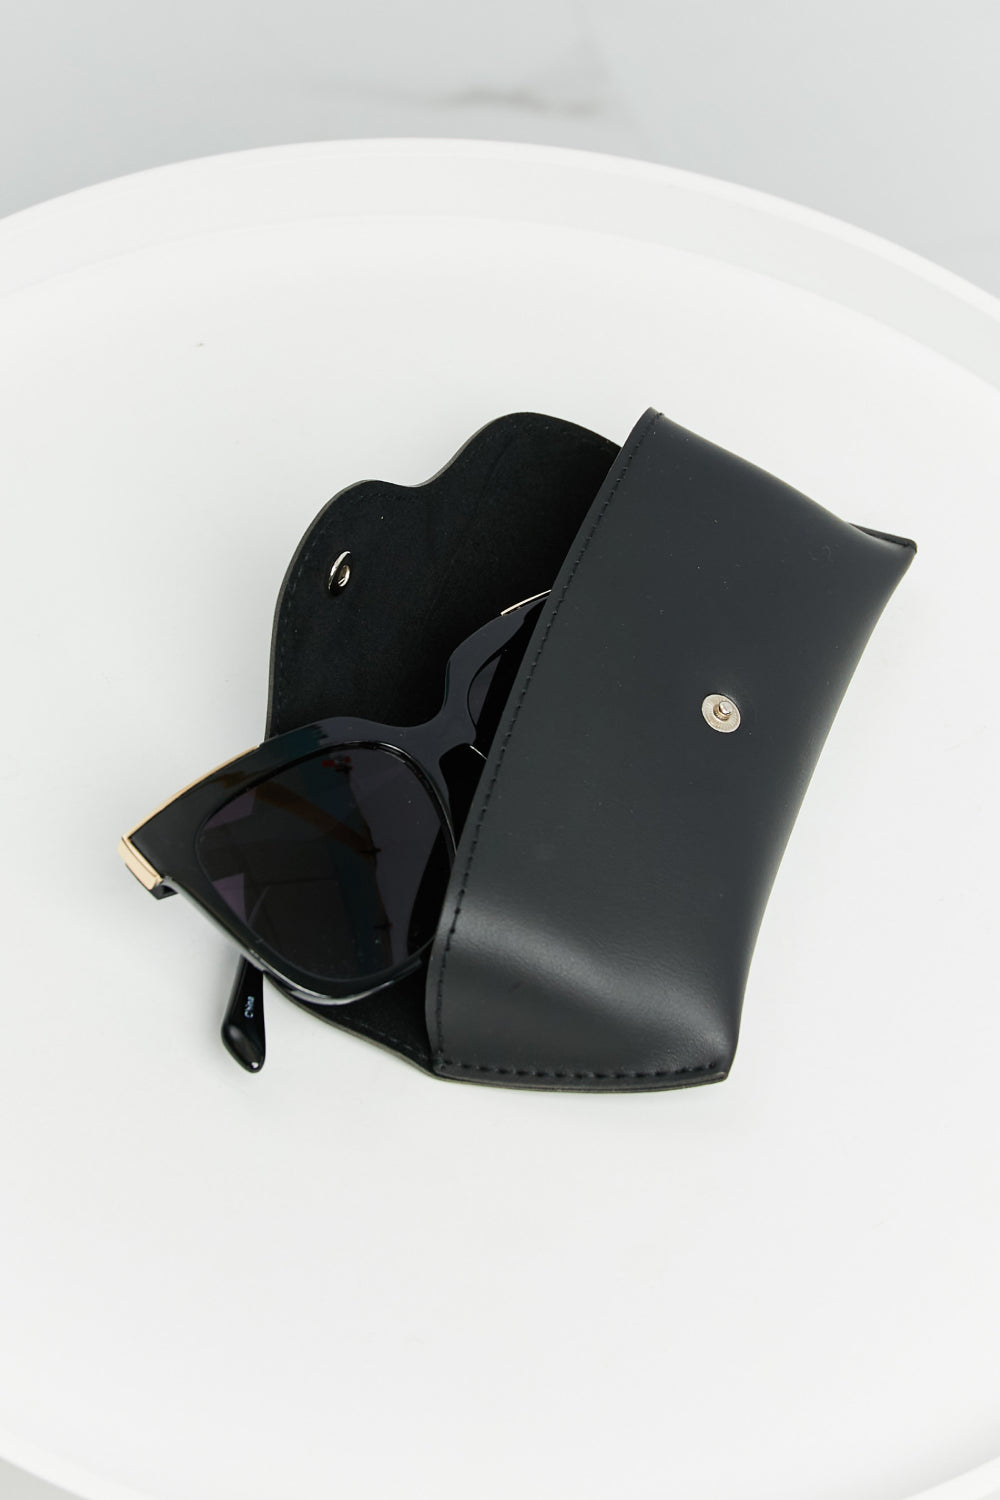 Sunglasses Aesthetic |  Square TAC Polarization Lens Sunglasses